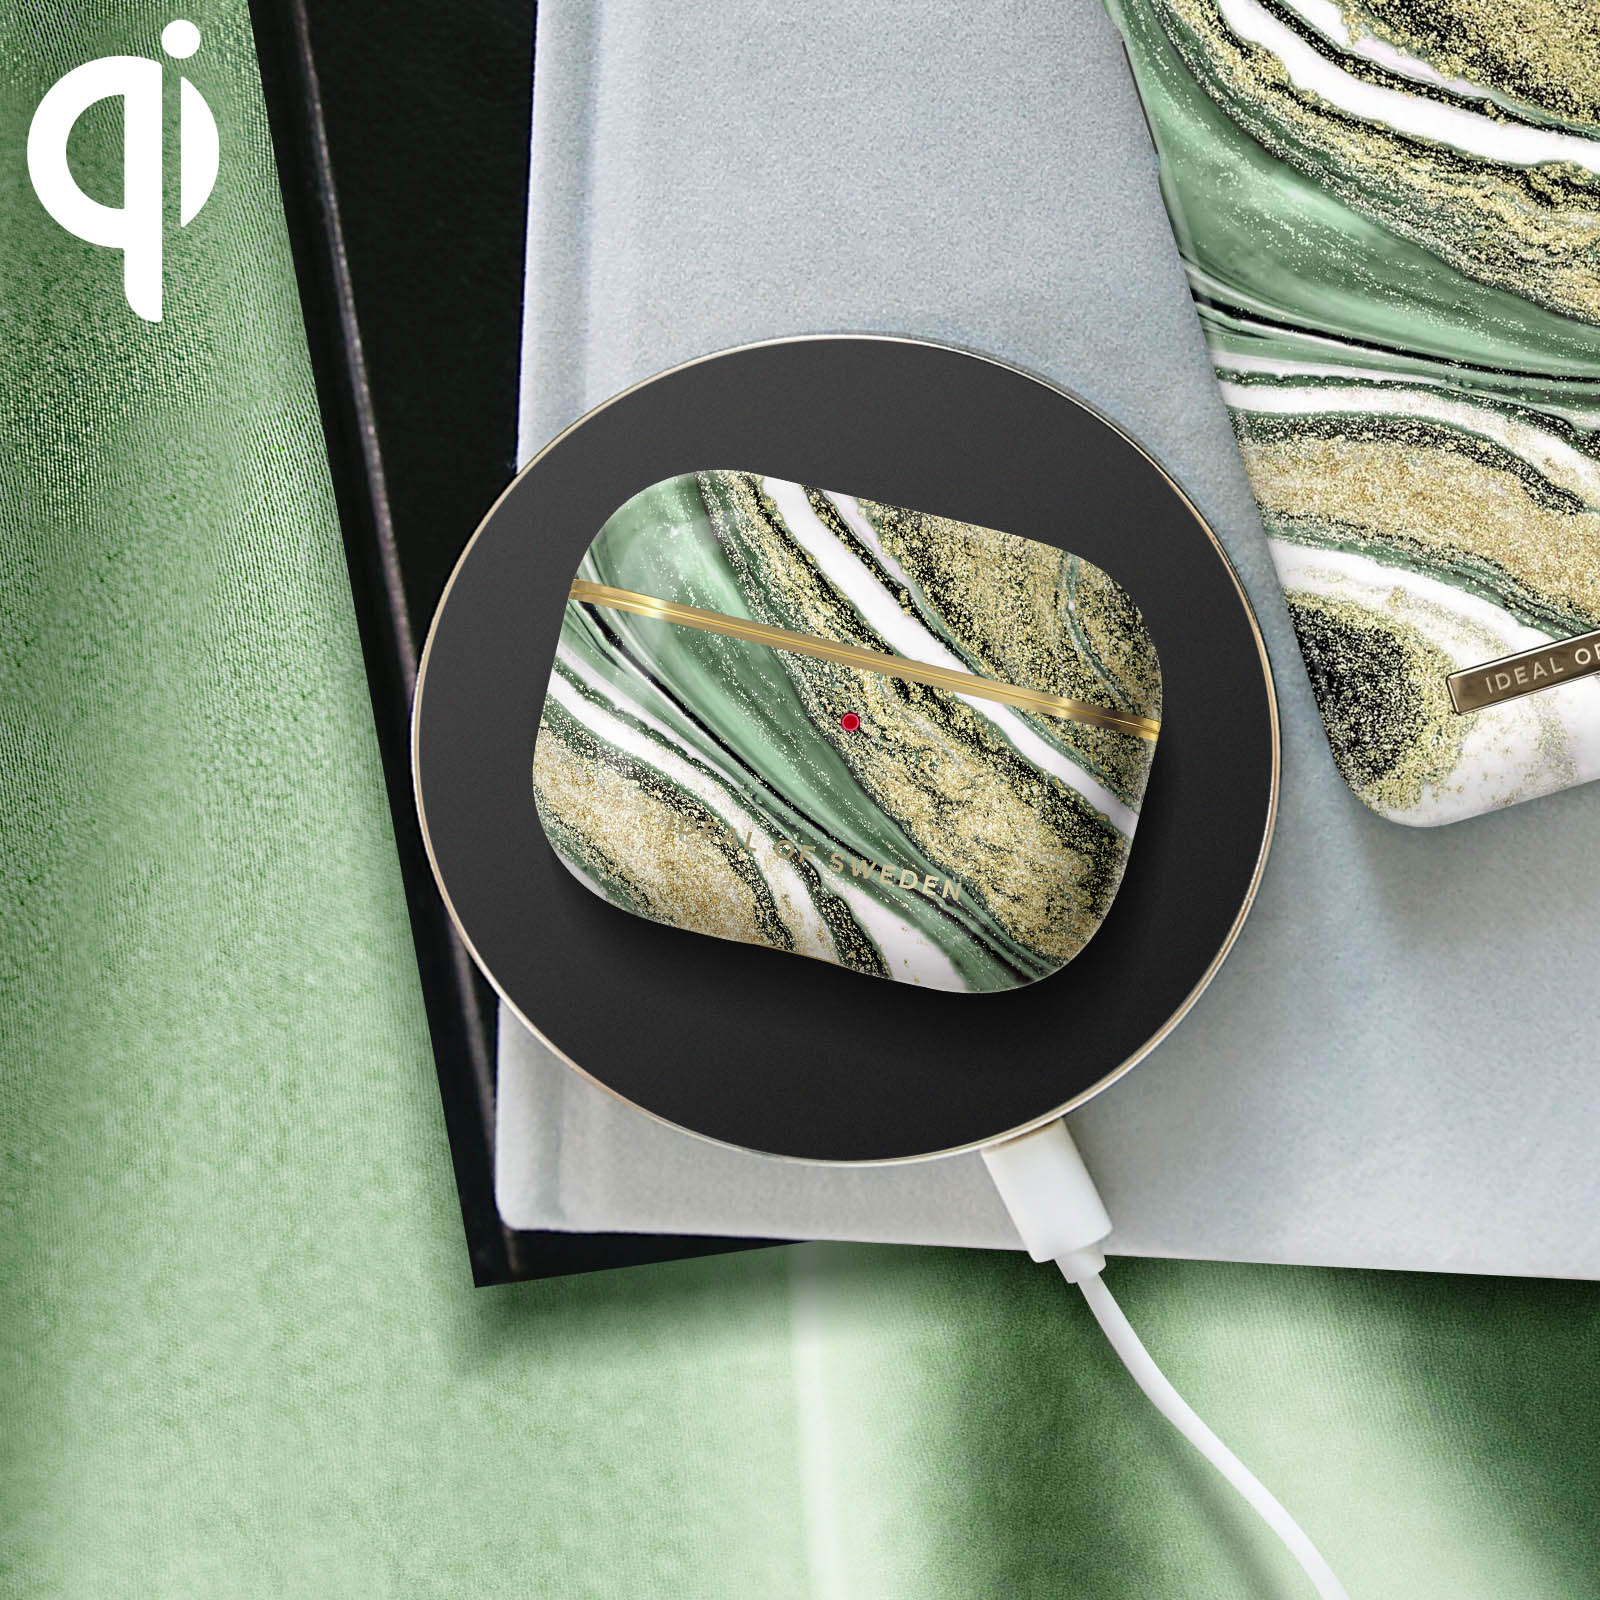 IDEAL OF SWEDEN IDFAPC-PRO-192 Apple für: Case Cover Green Full passend AirPod Swirl Cosmic